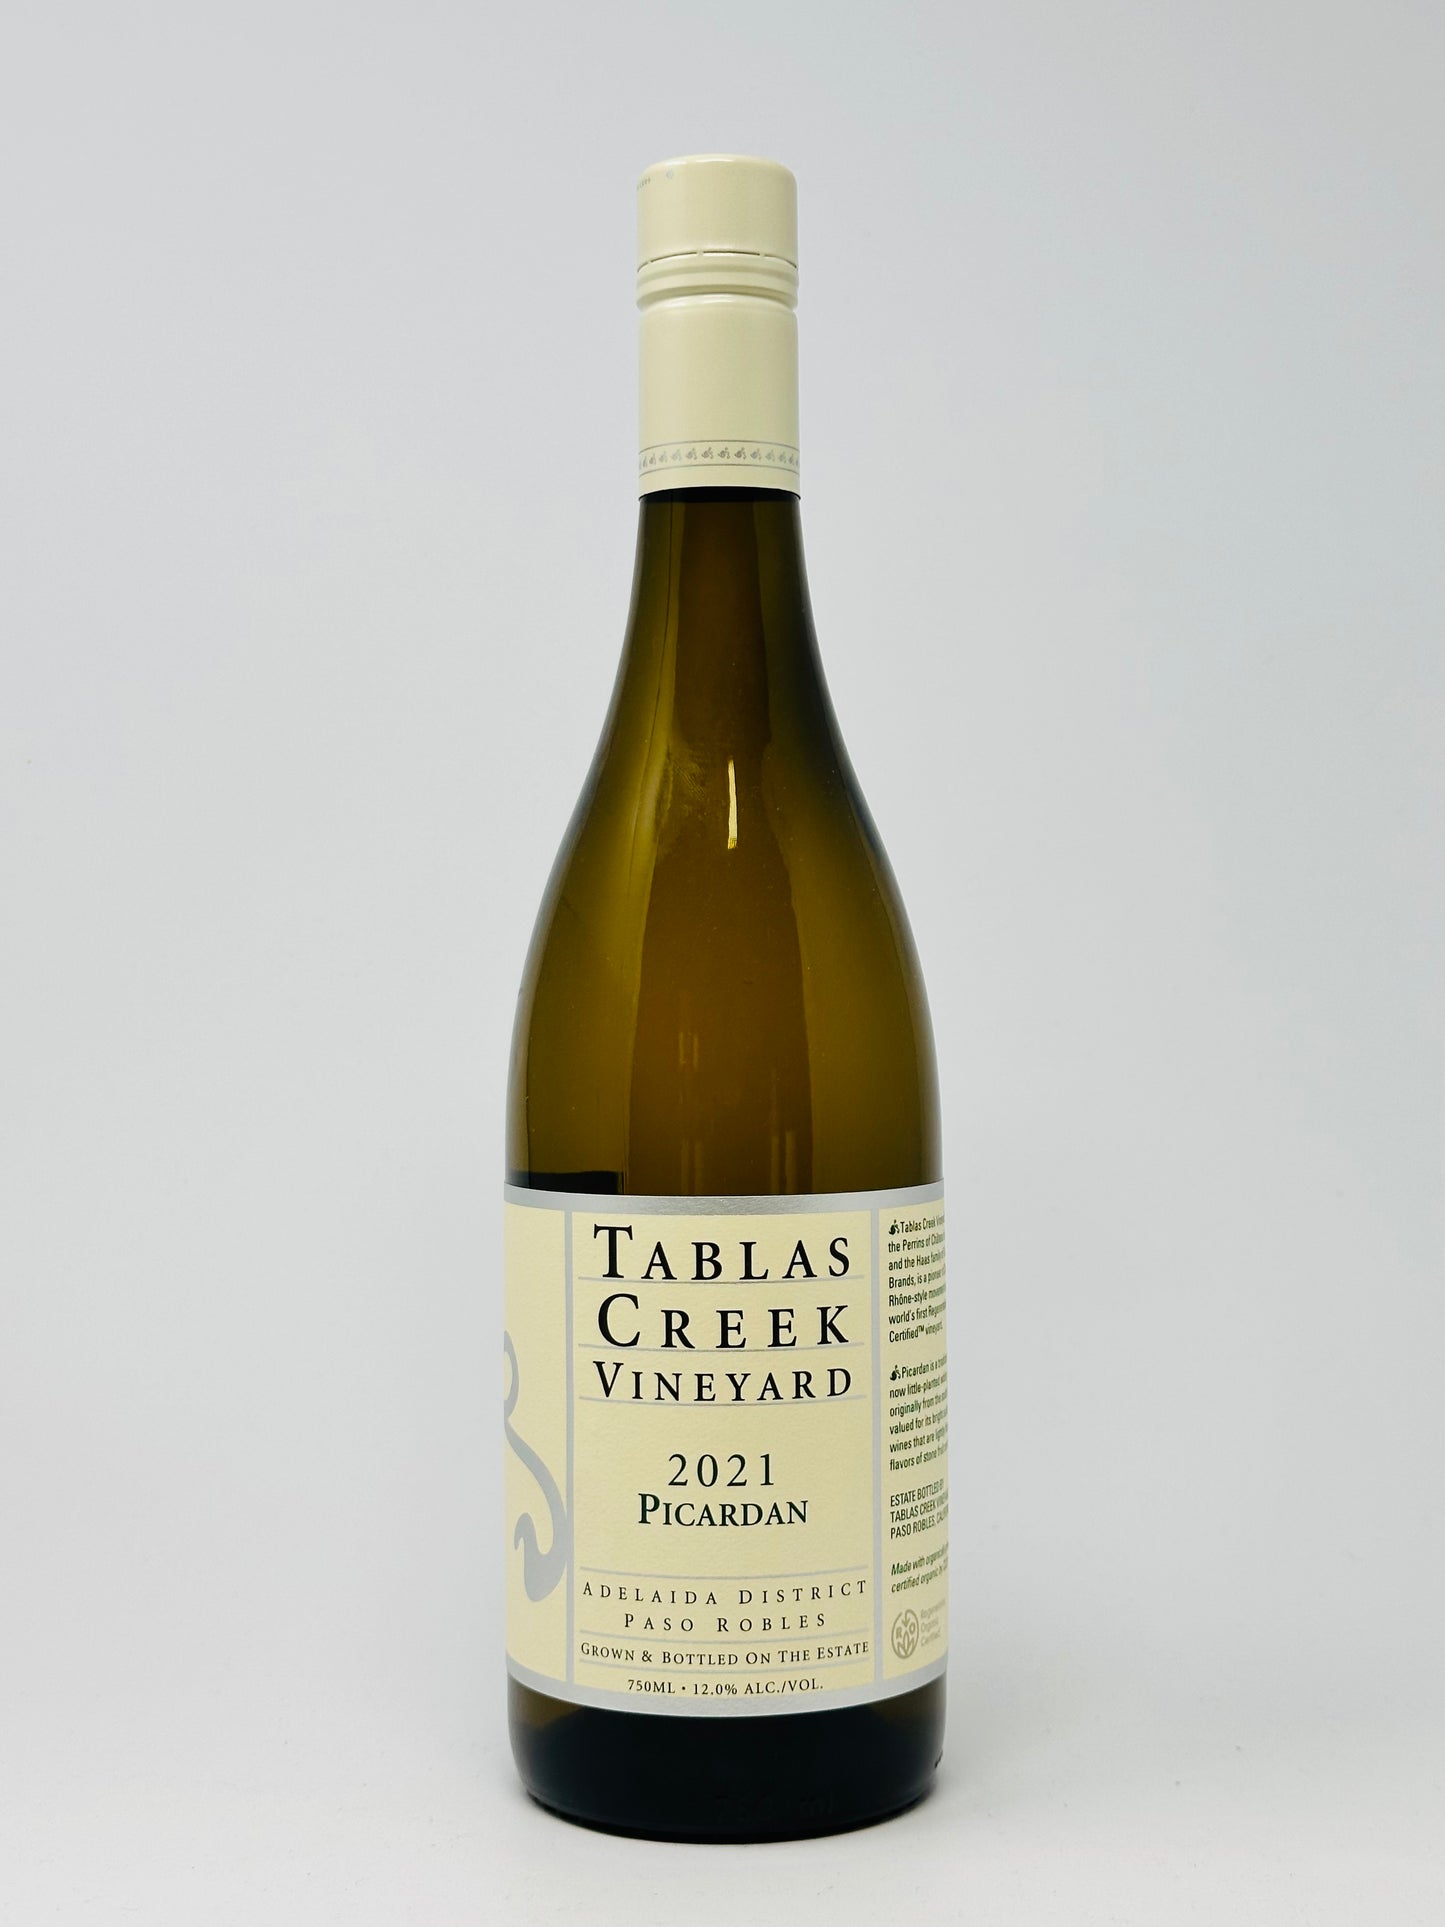 Tablas Creek Vineyard 2021 Picardan